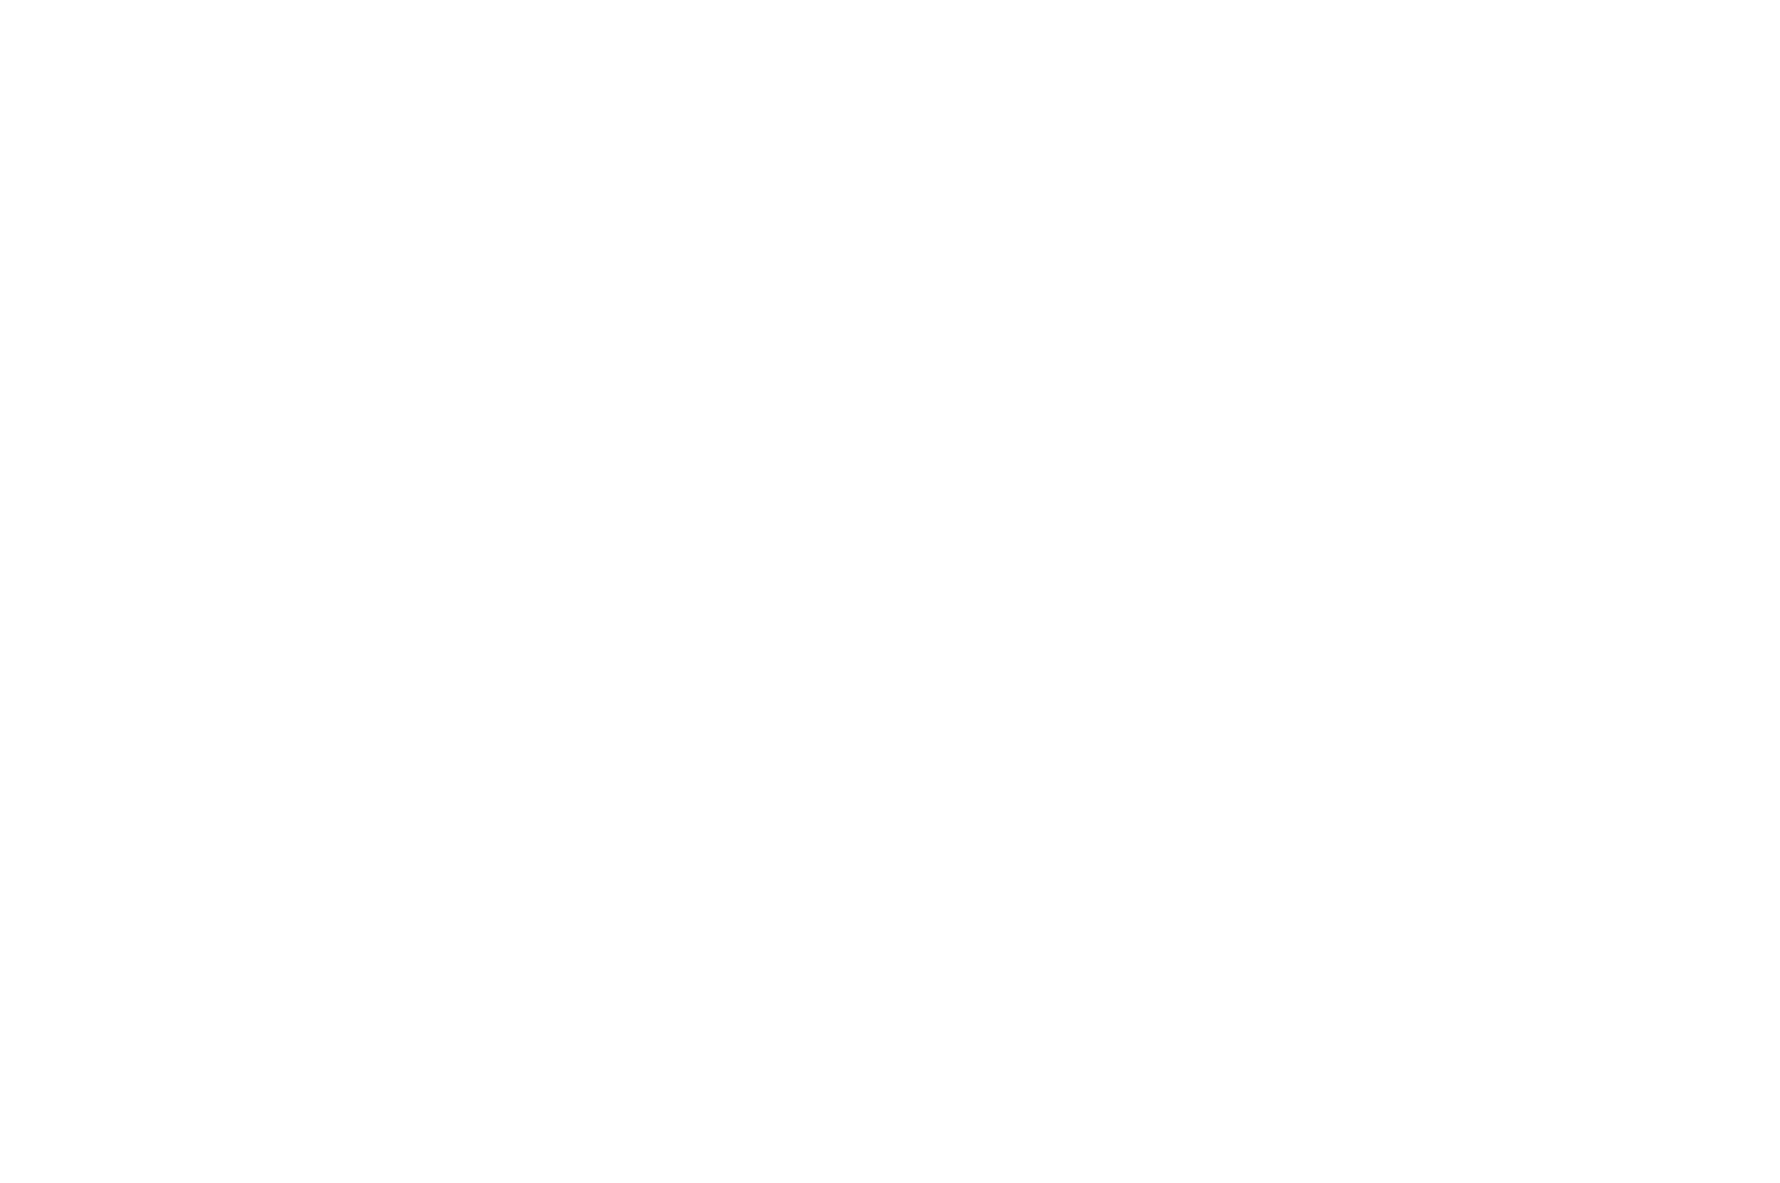 Aspects Bespoke Carpentry & Joinery